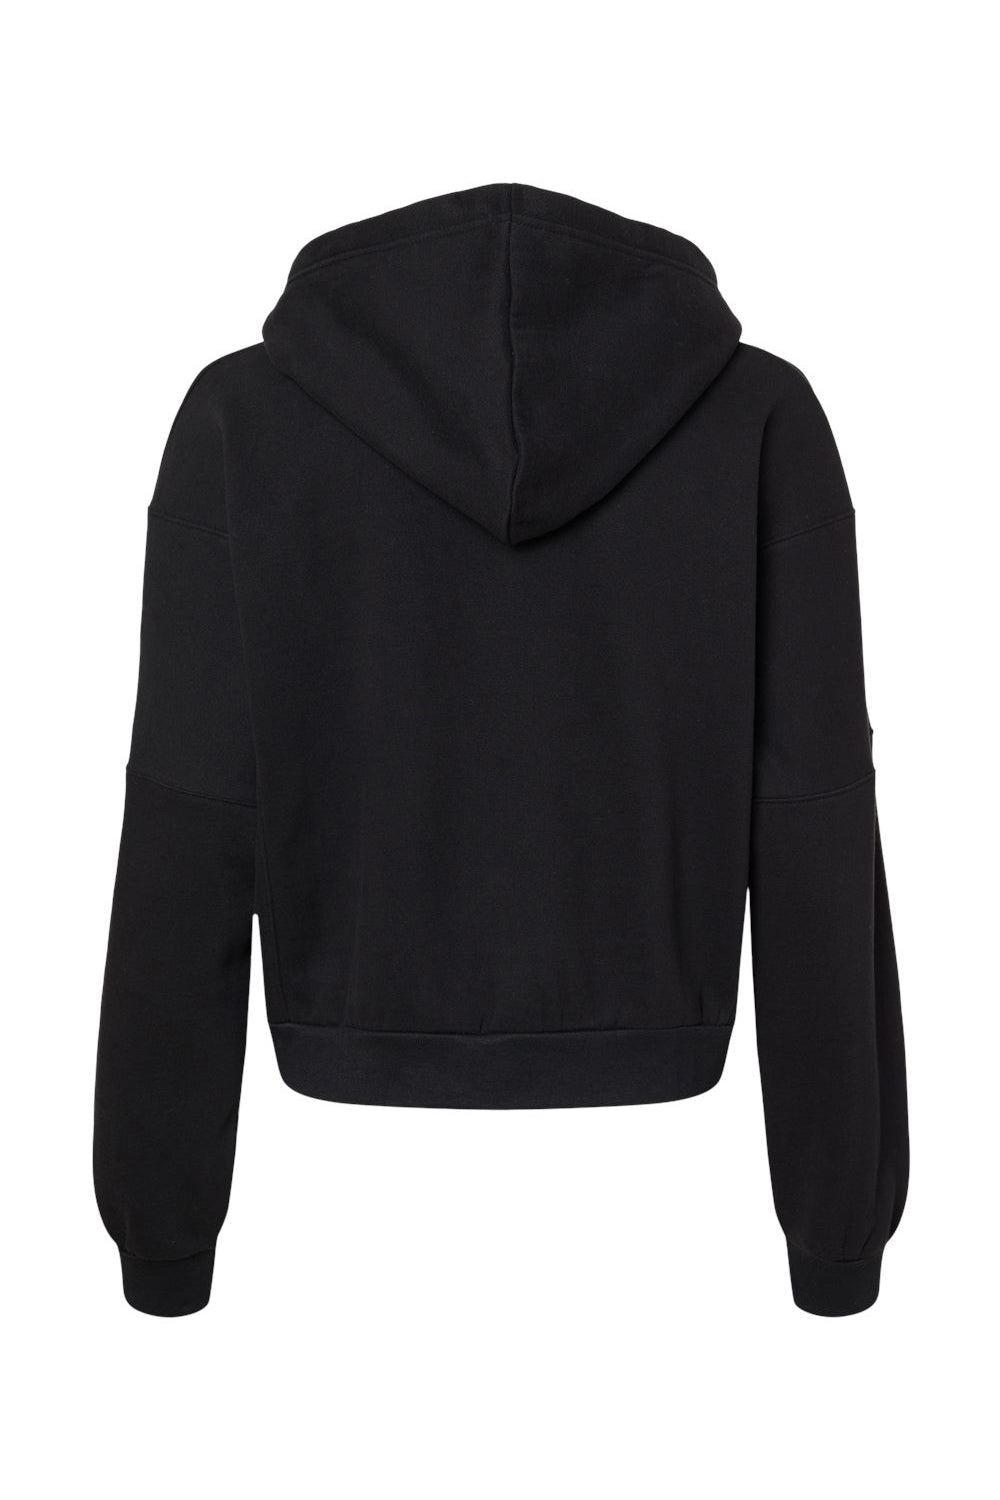 MV Sport W21751 Womens Sueded Fleece Crop Hooded Sweatshirt Hoodie Black Flat Back